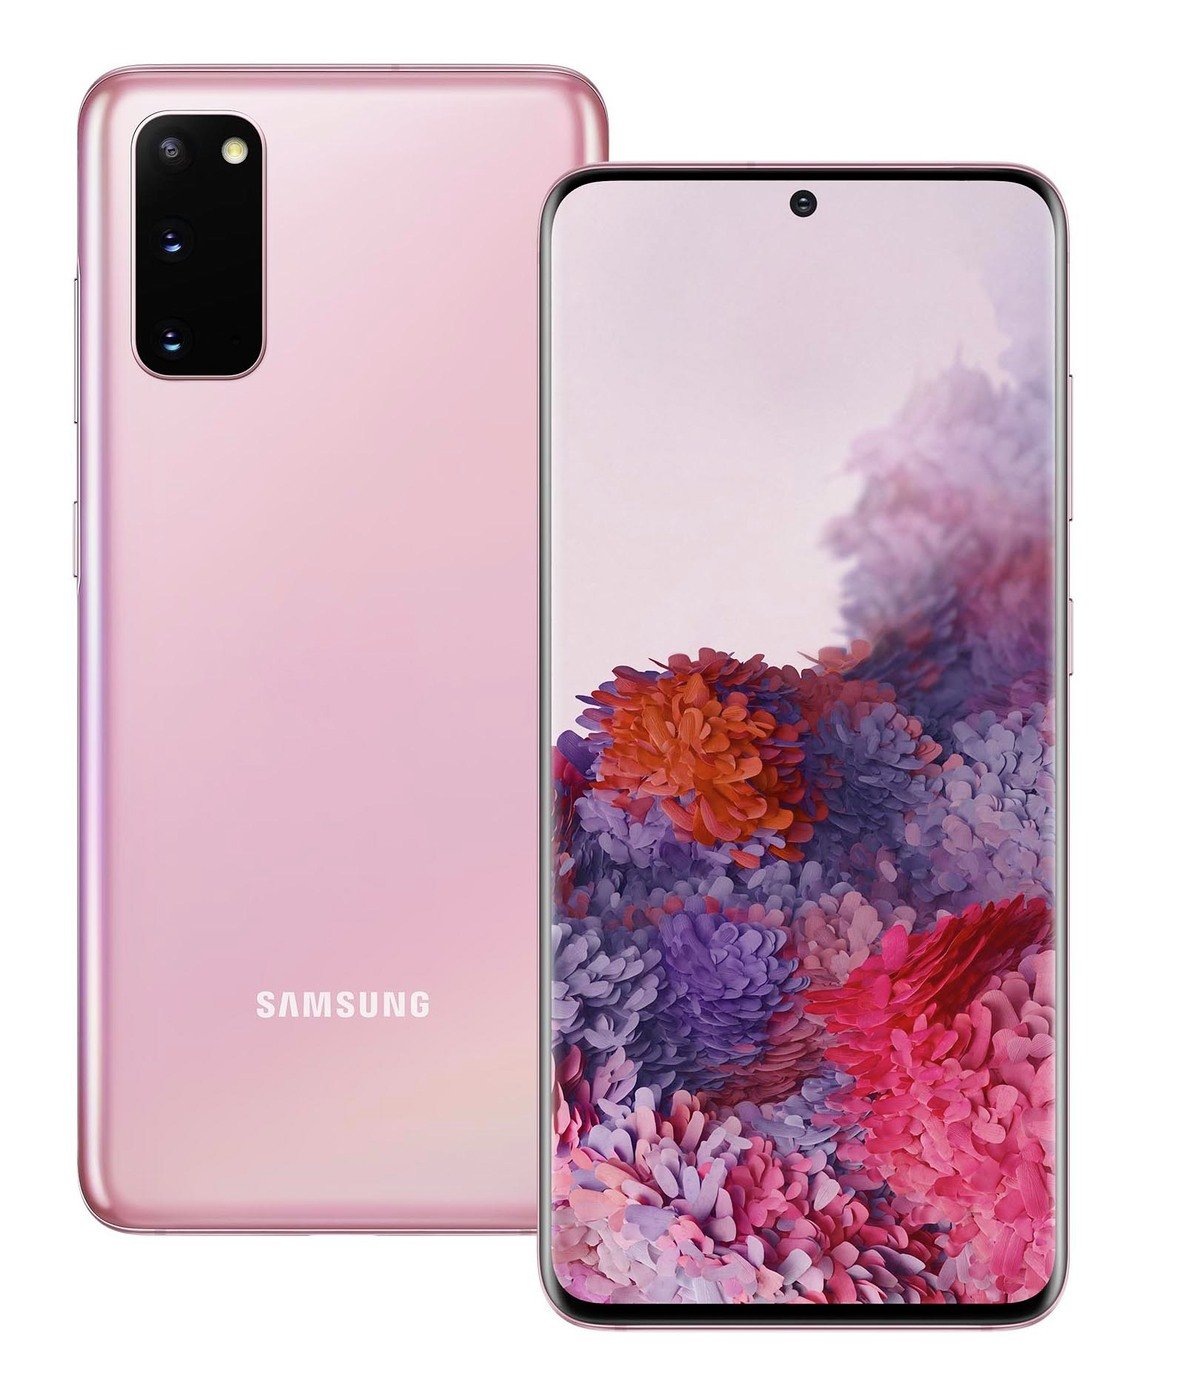 SIM Free Samsung Galaxy S20 128GB 4G Mobile Phone-Cloud Pink